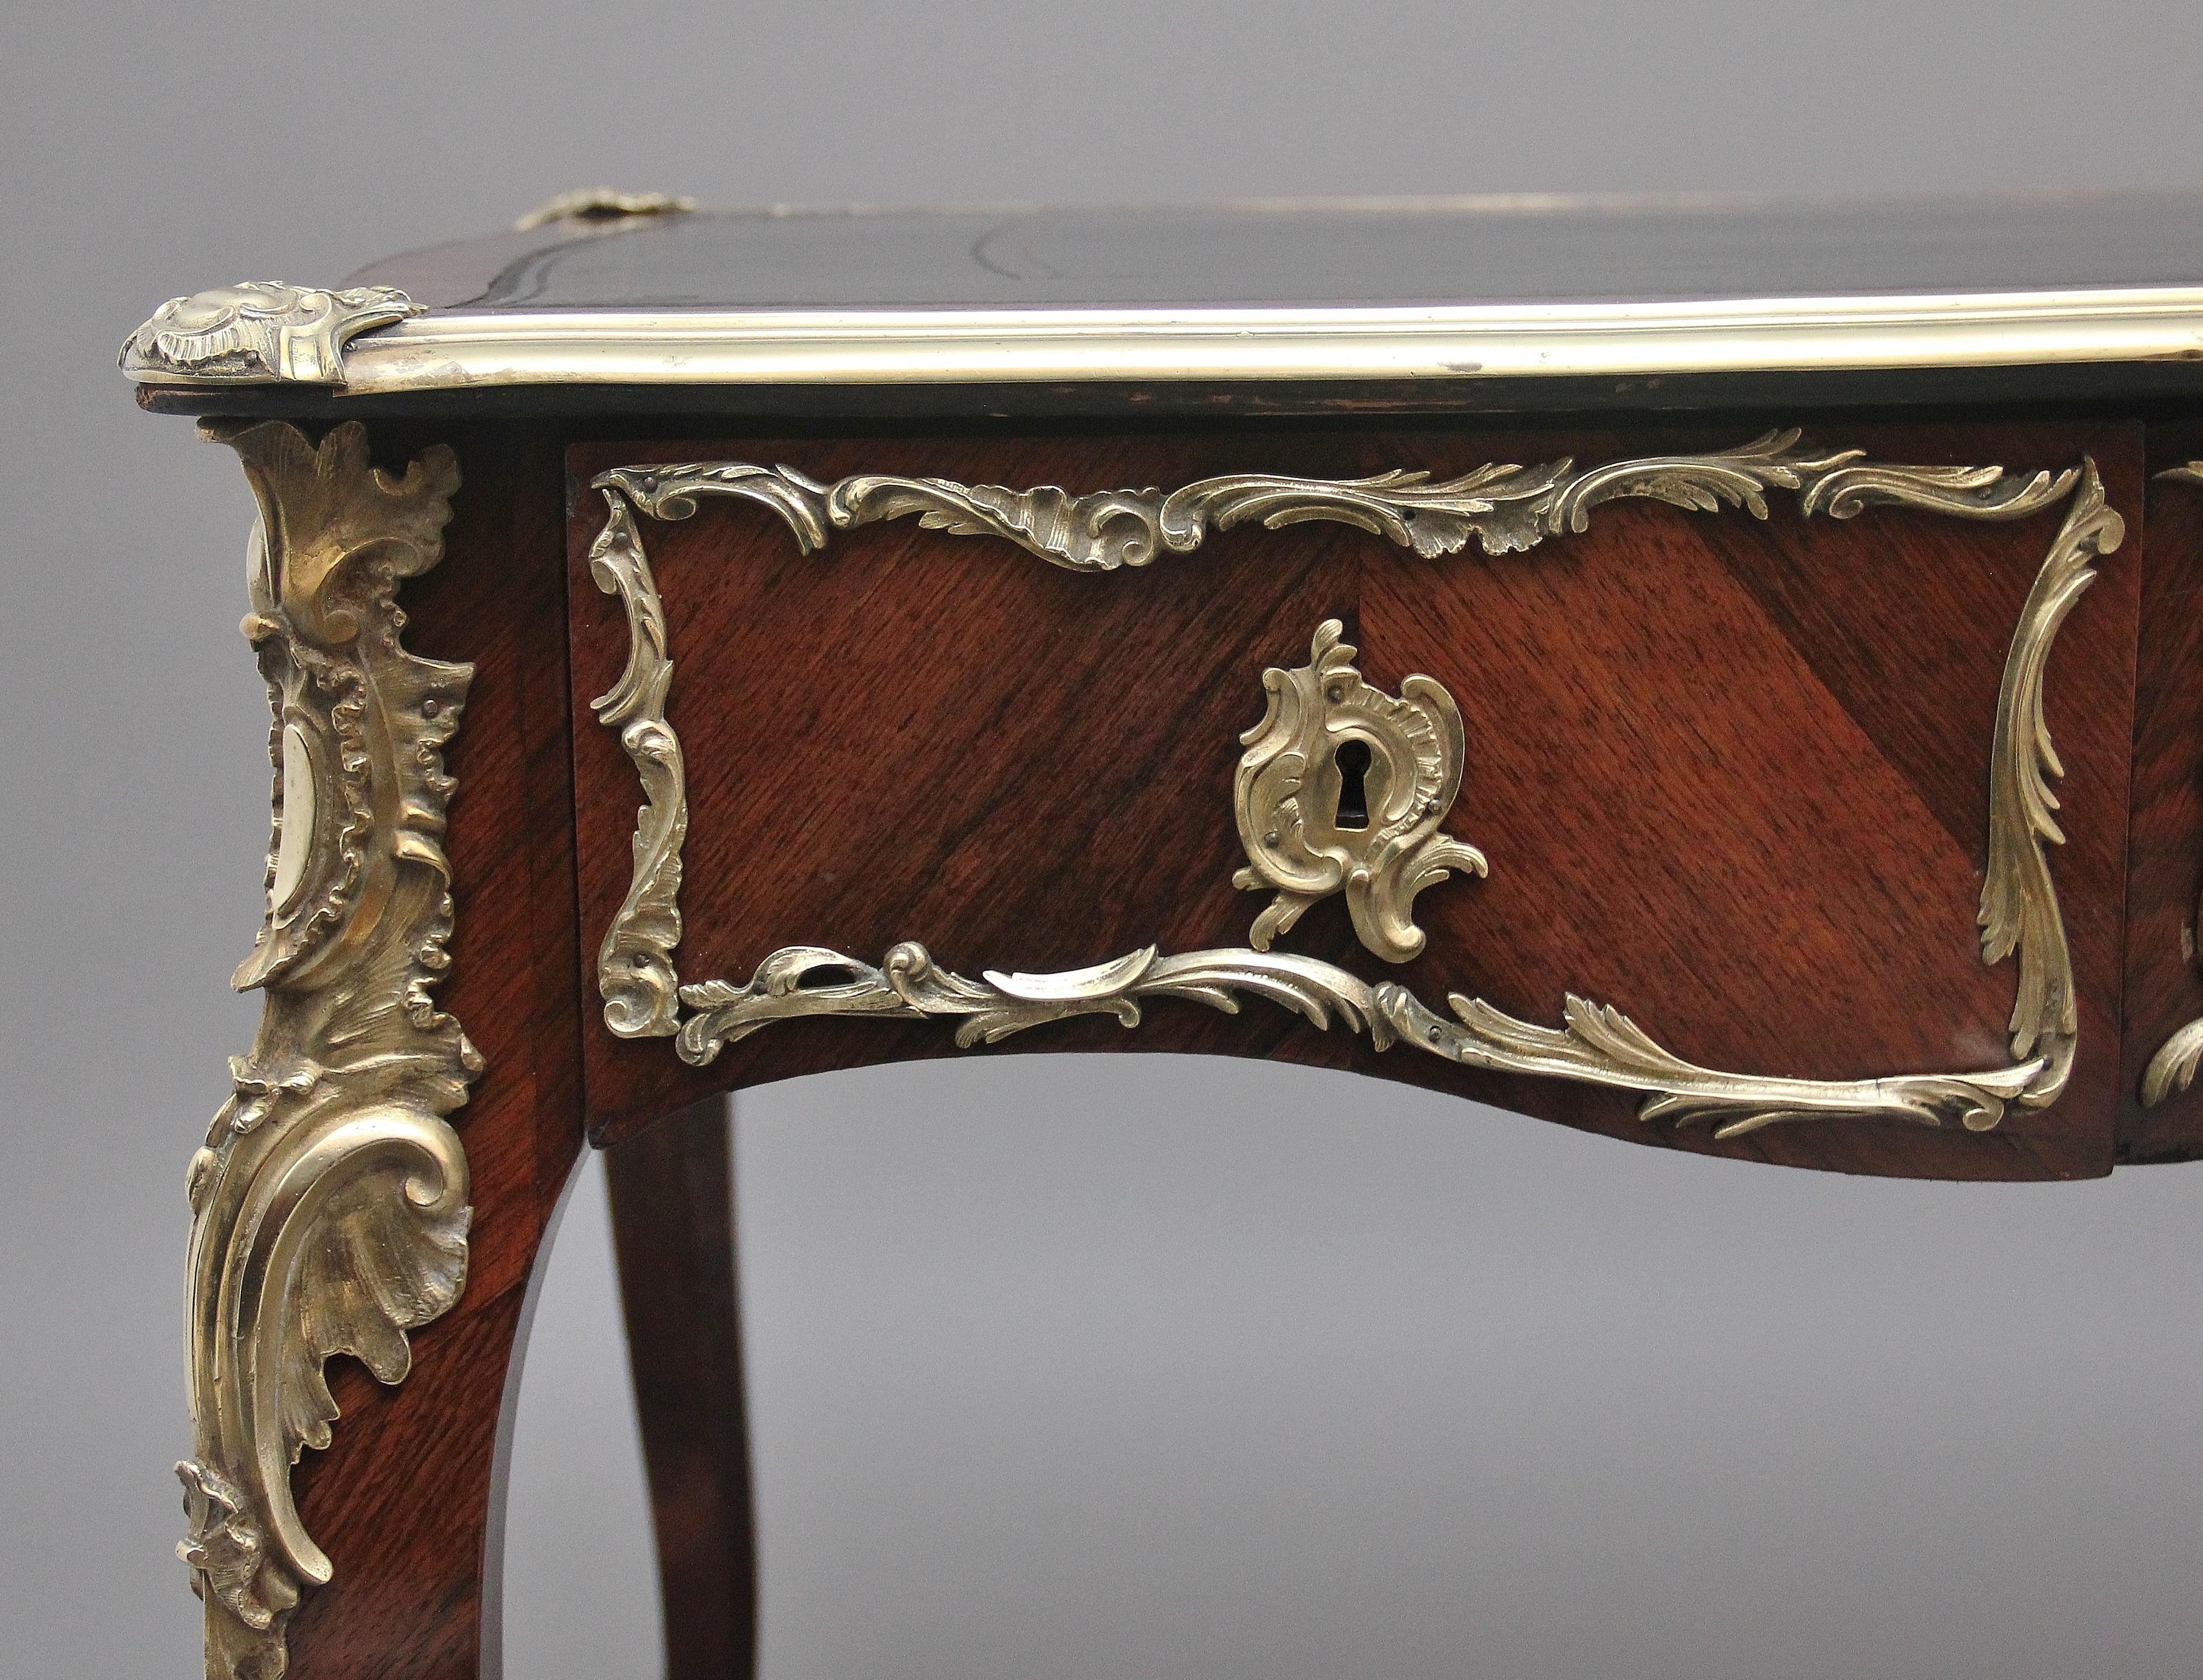 Empire Superb Quality 19th Century French Kingwood and Ormolu Mounted Bureau-Plat Des